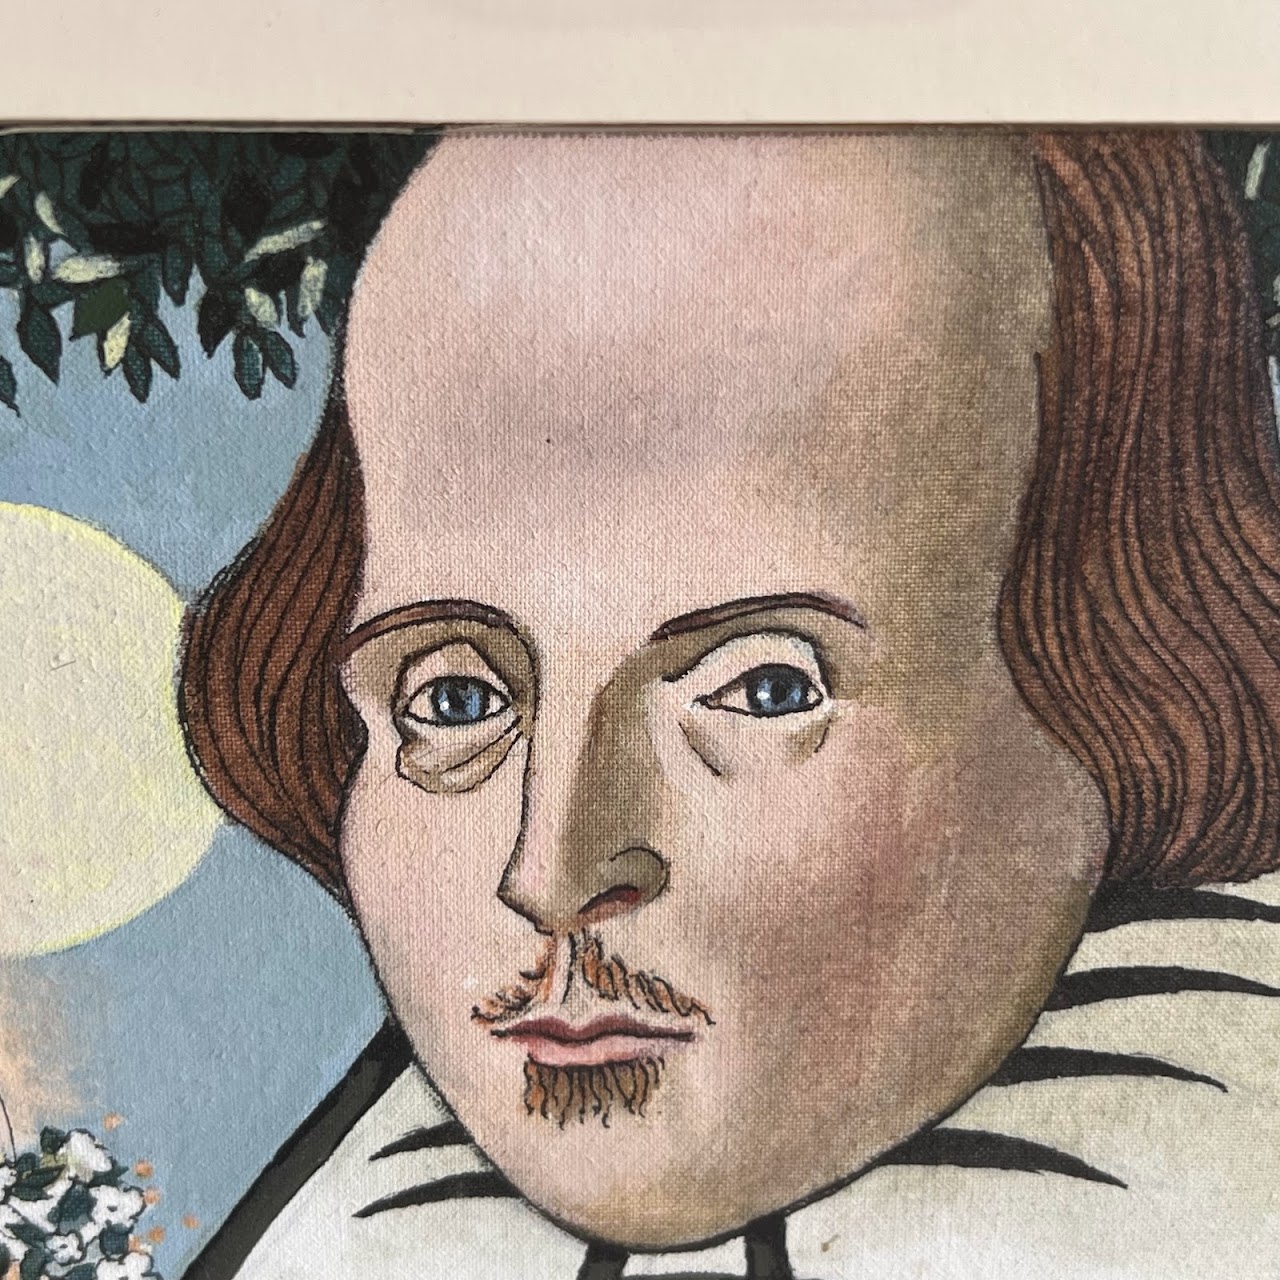 Shakespeare 'A Midsummer Night's Dream' Painting